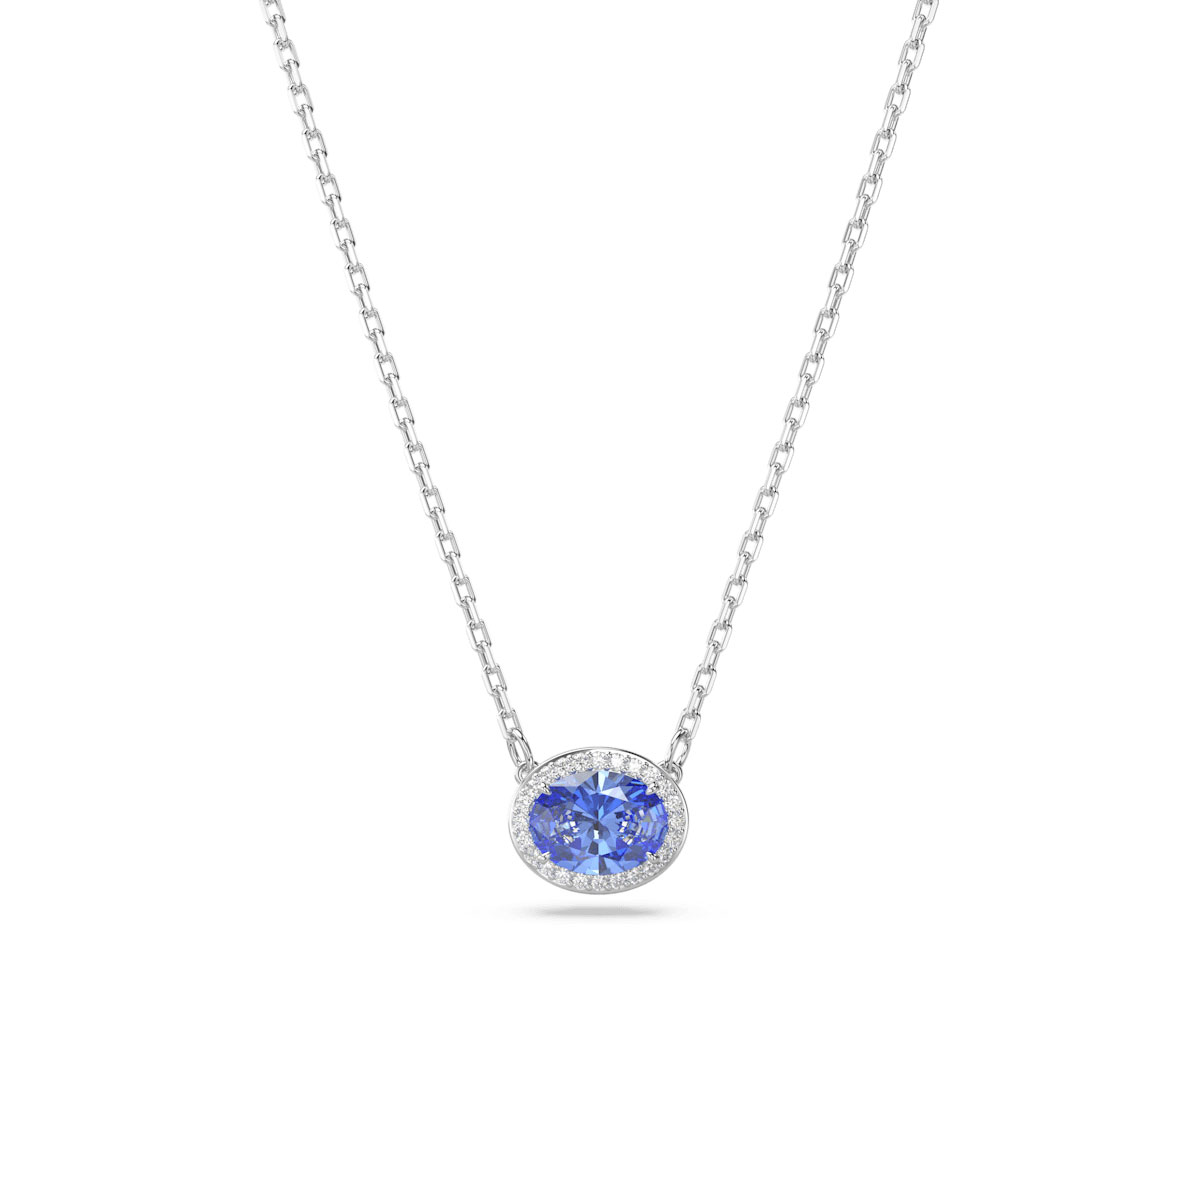 Swarovski Constella Oval Blue Crystal and Rhodium Pendant Necklace